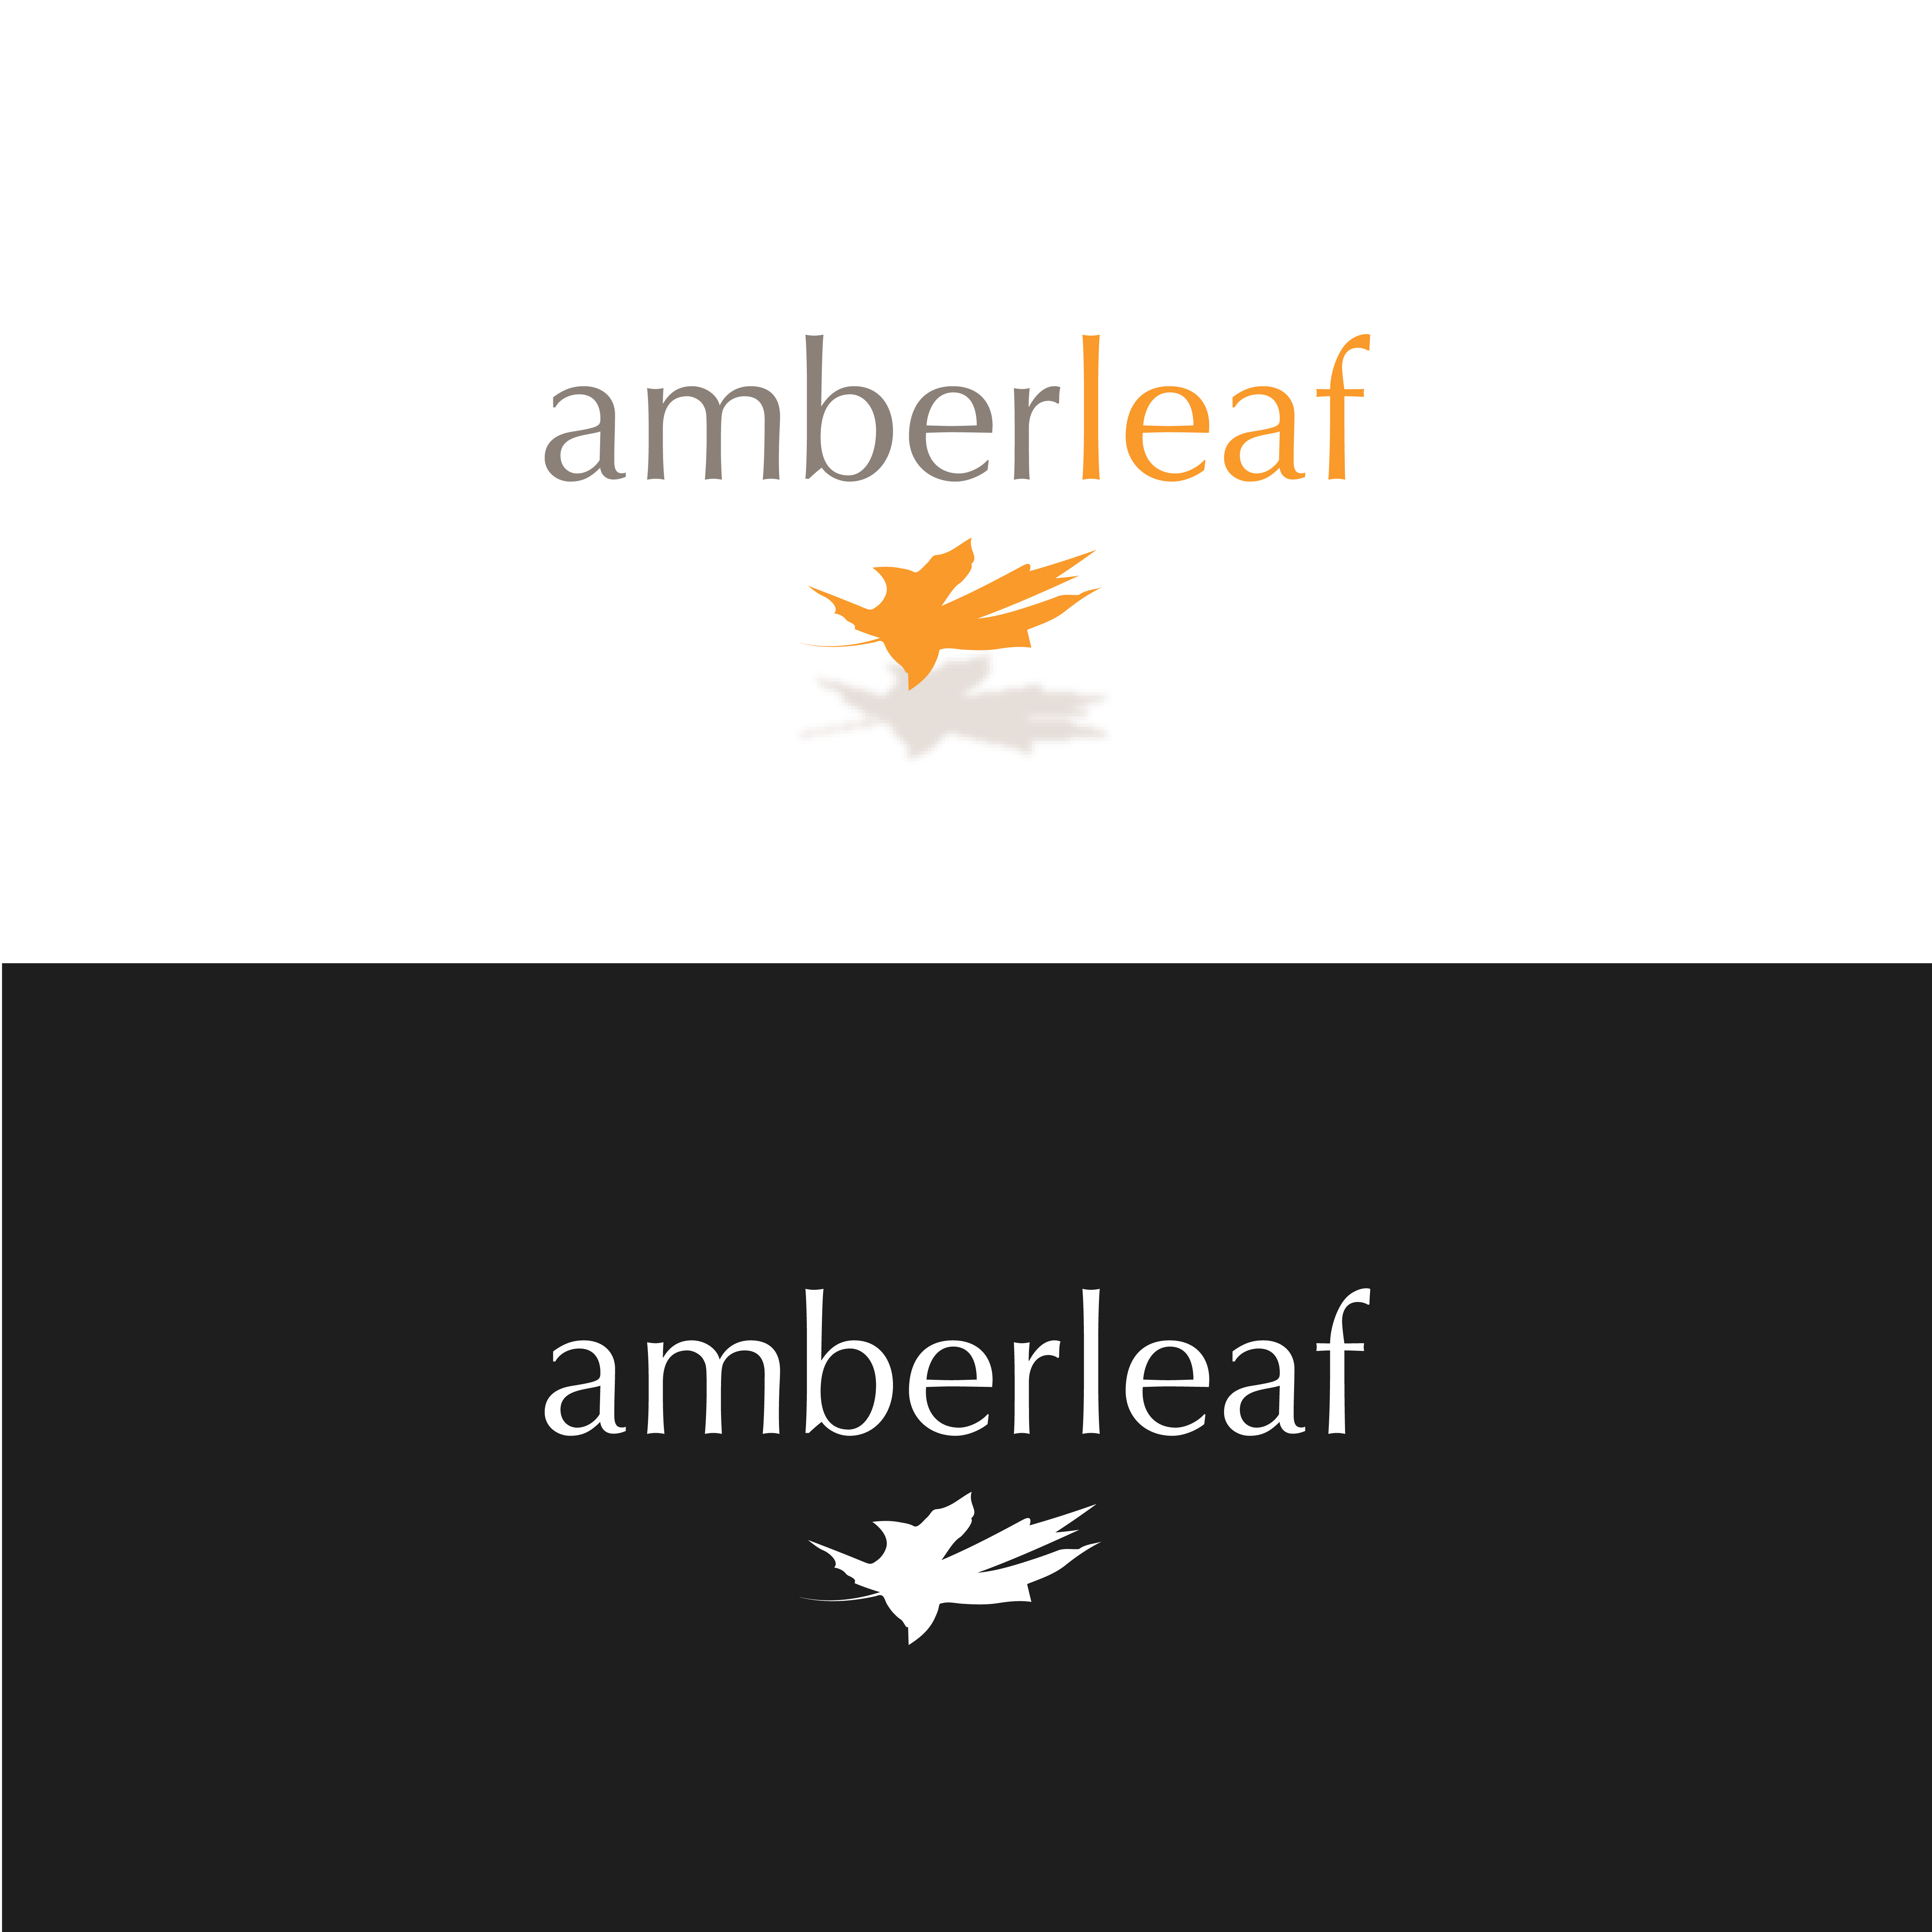 amberleaf logos